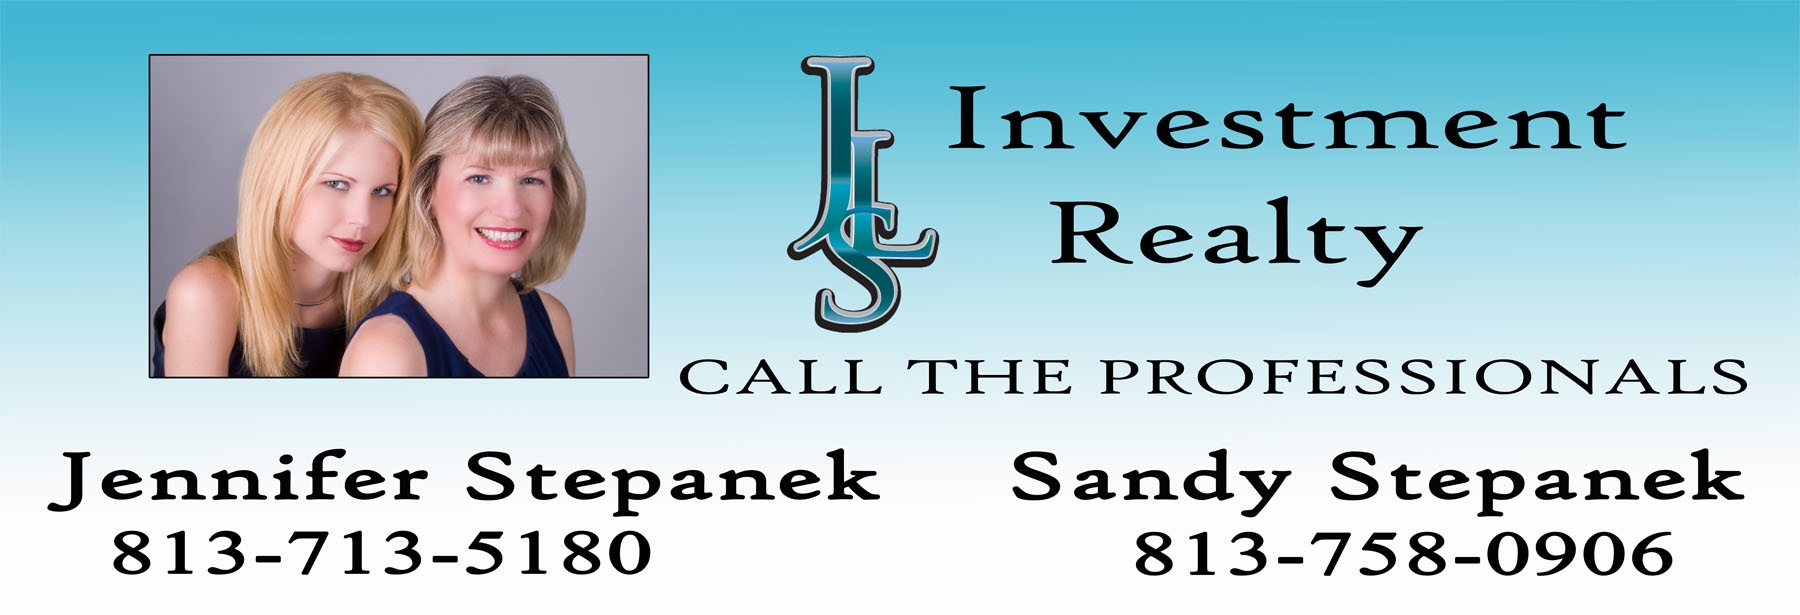 JLS Investment Realty Sandy & Jennifer Stepanek